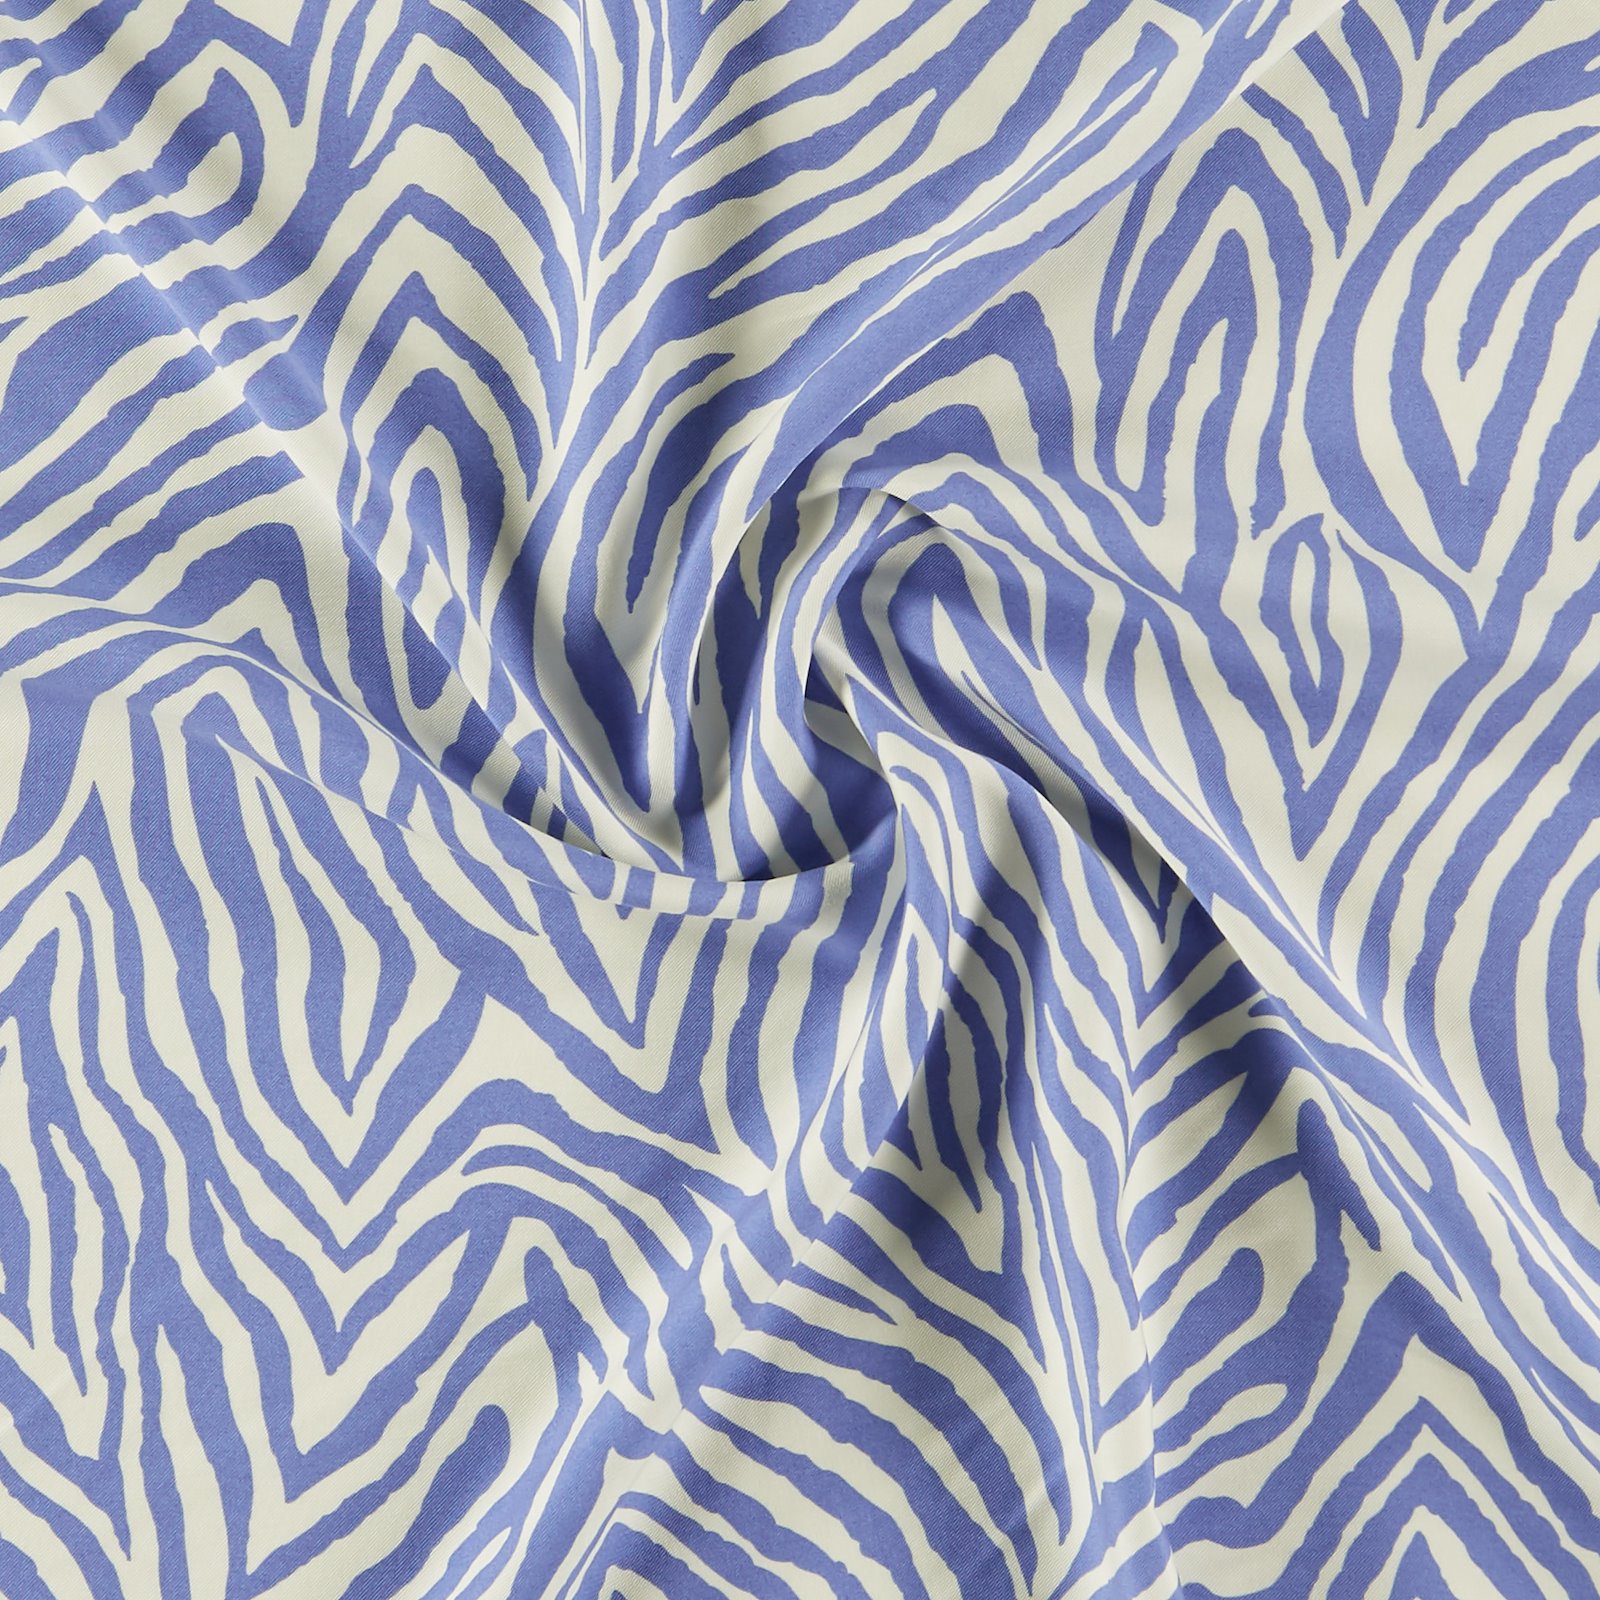 Woven viscose twill w blue zebra print 521140_pack